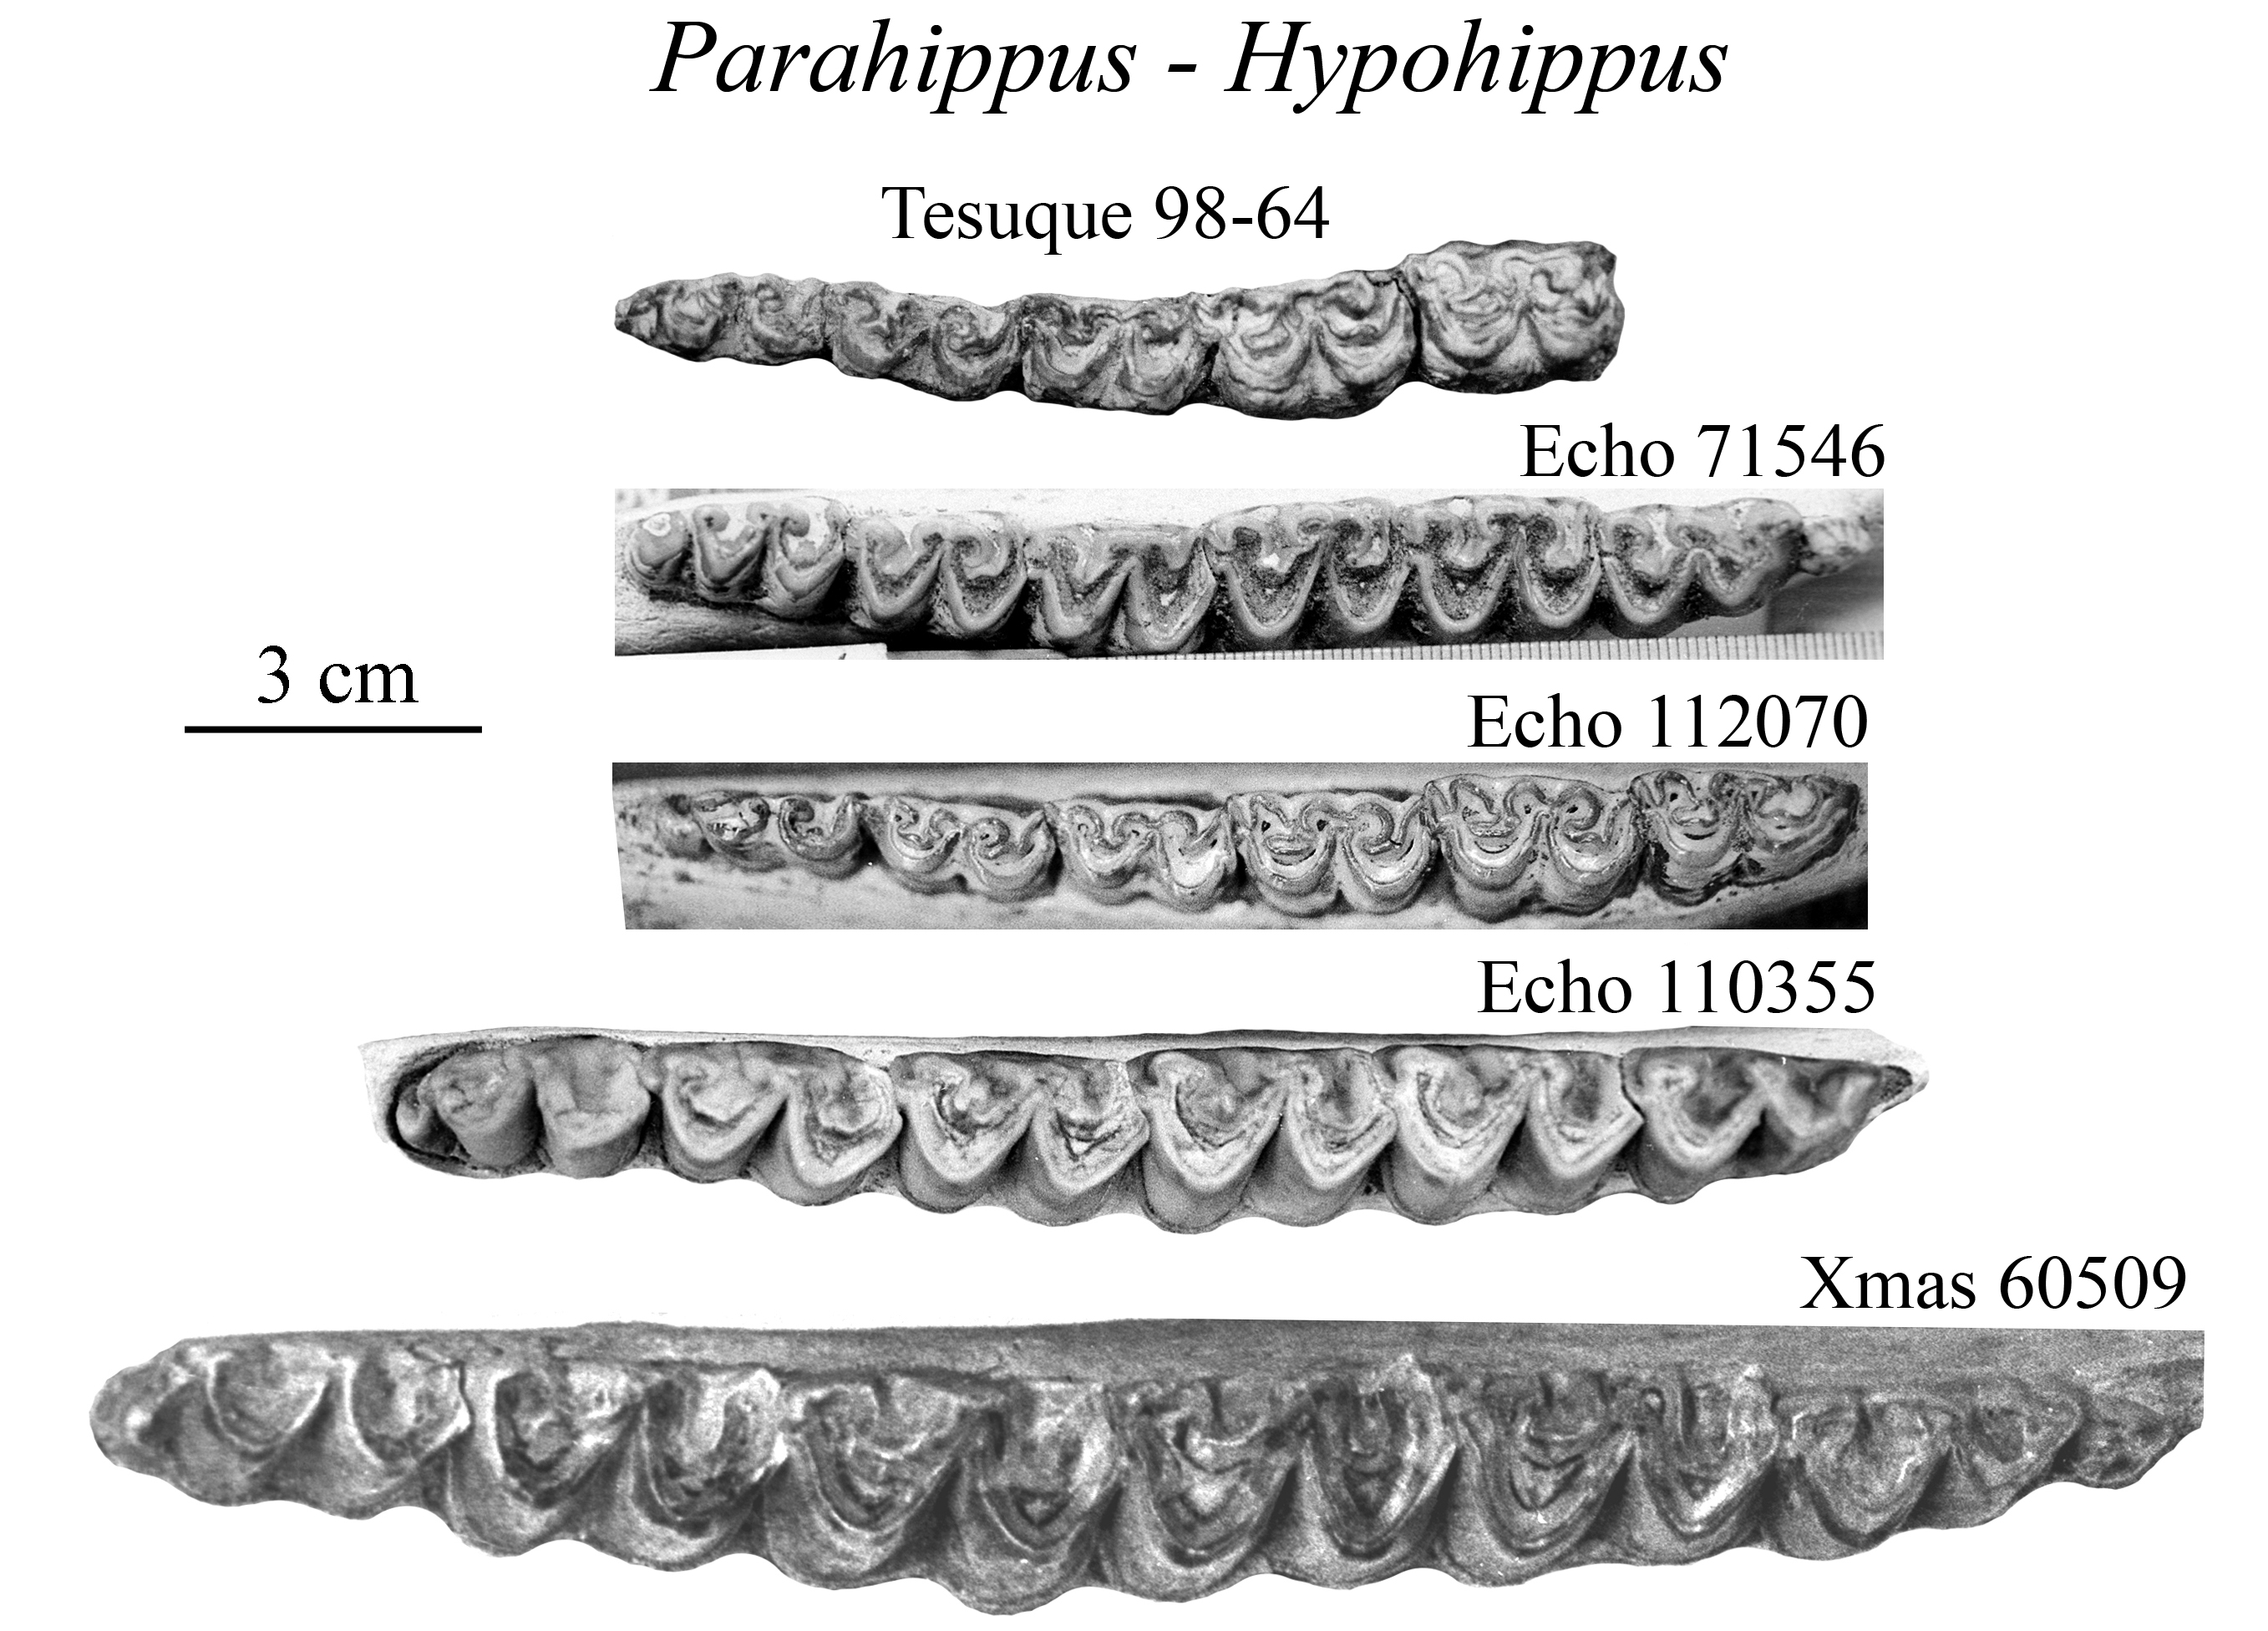 Hypo-Parahippus lower cheek teeth